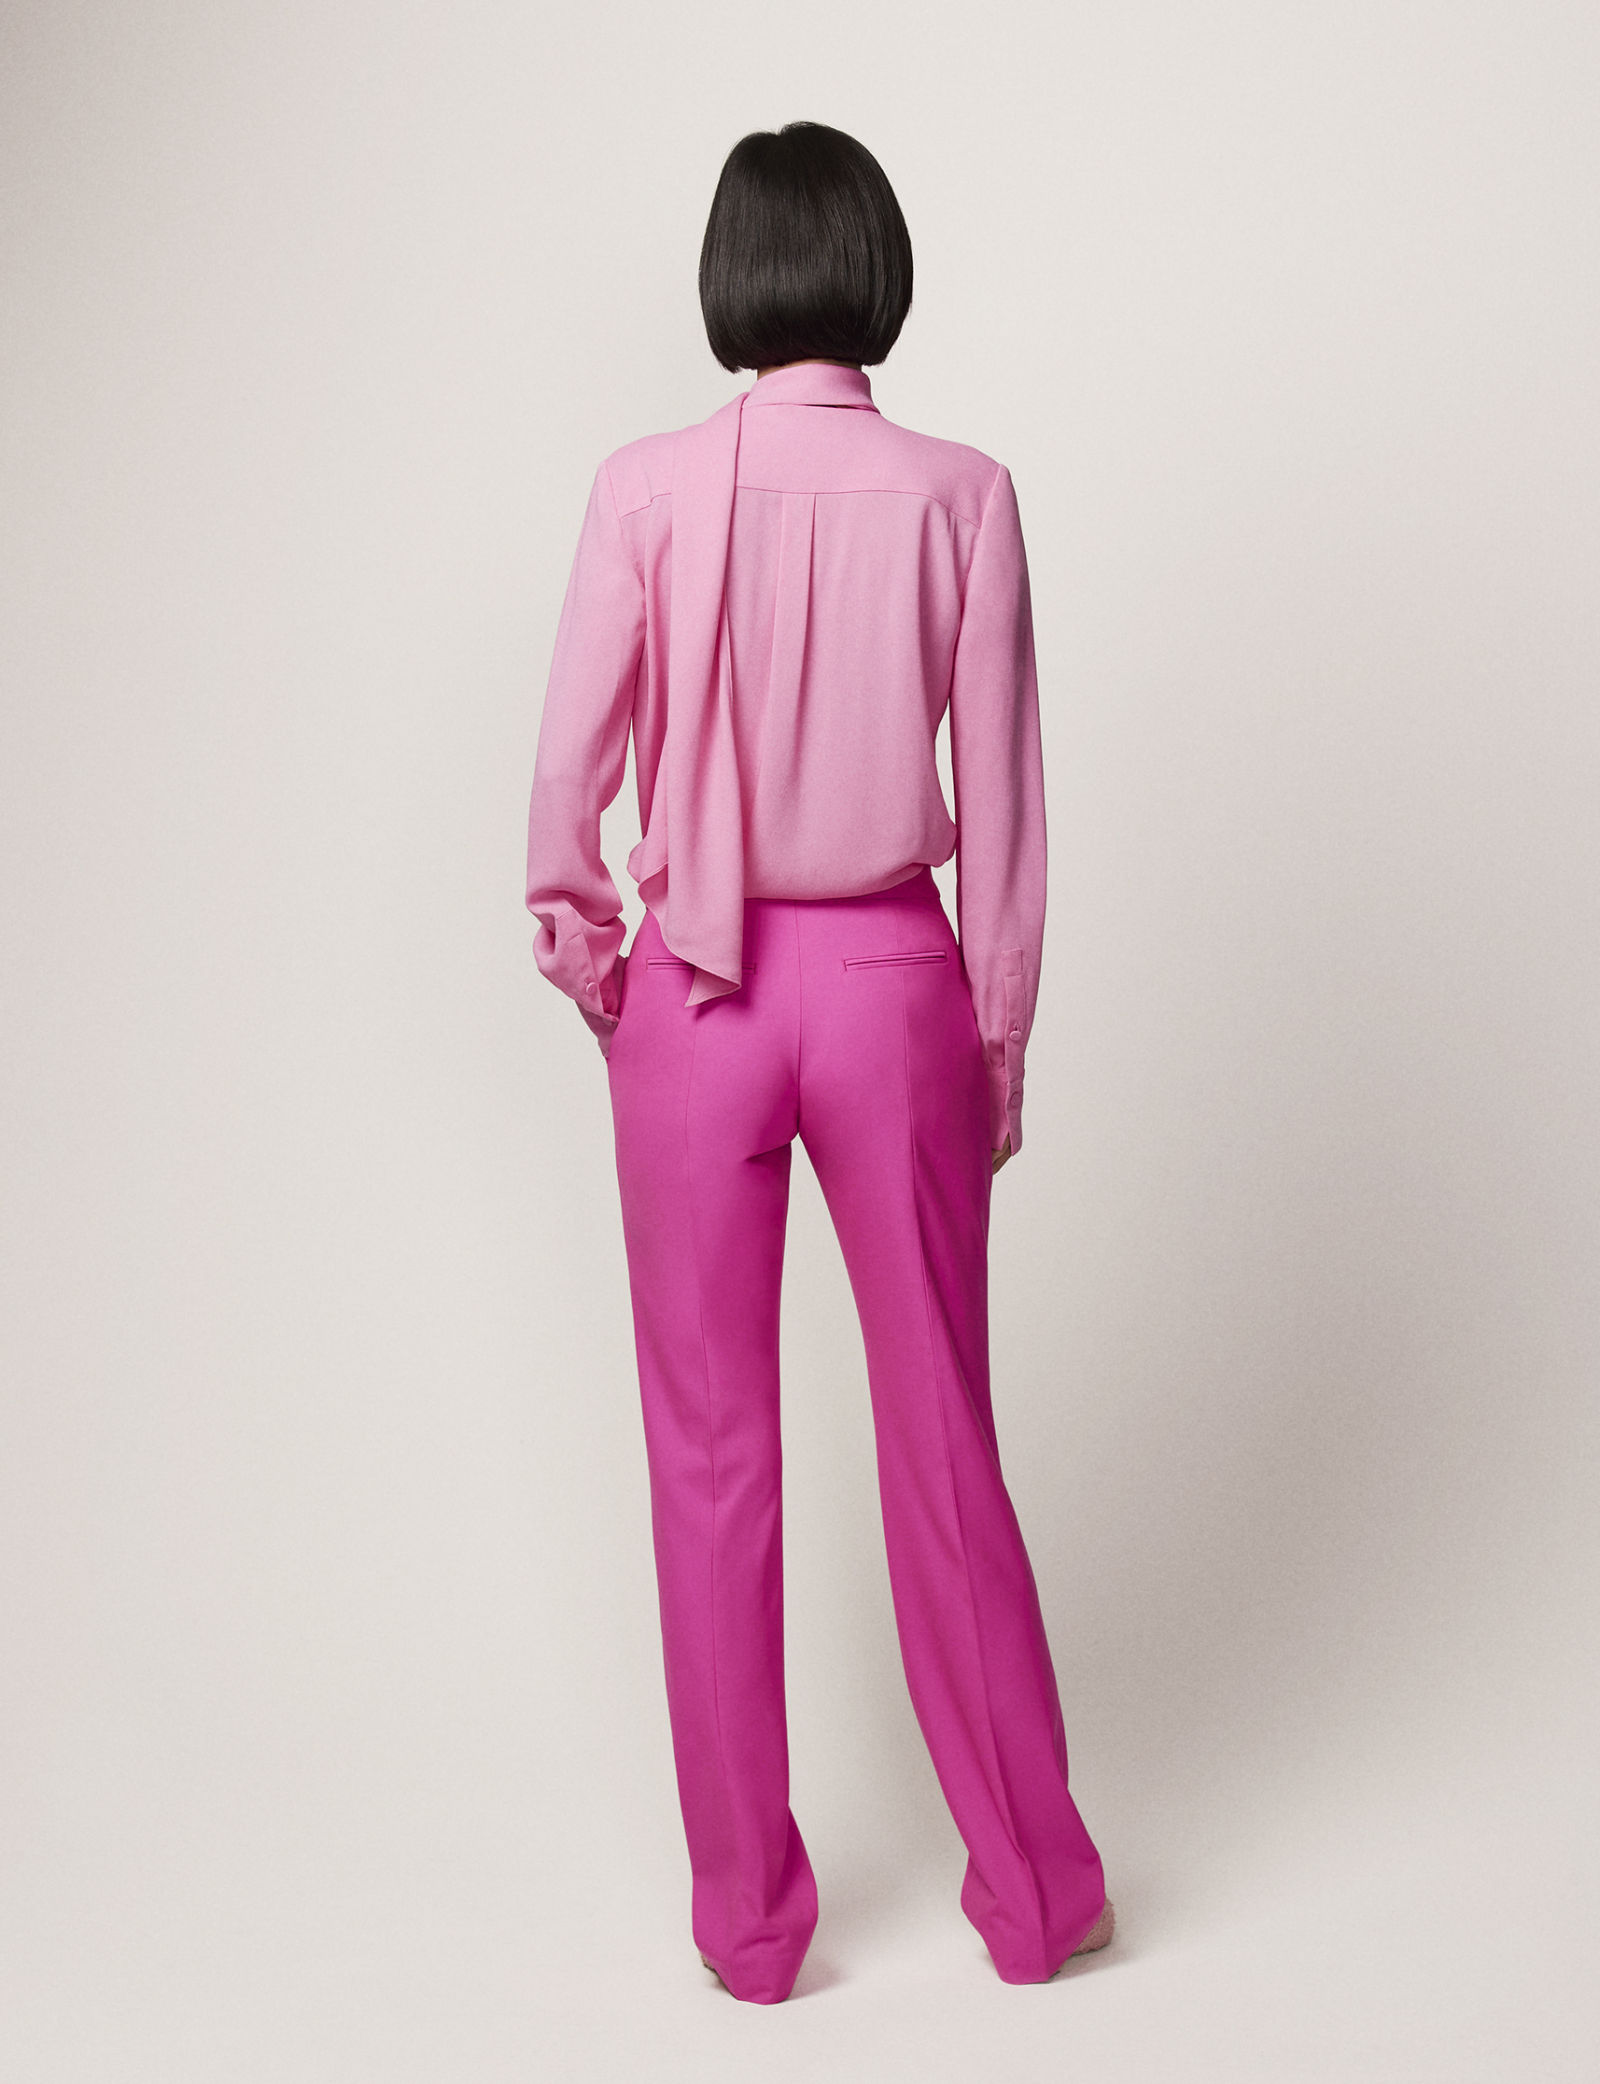 LOOK 07 Pink Suit 072 copy